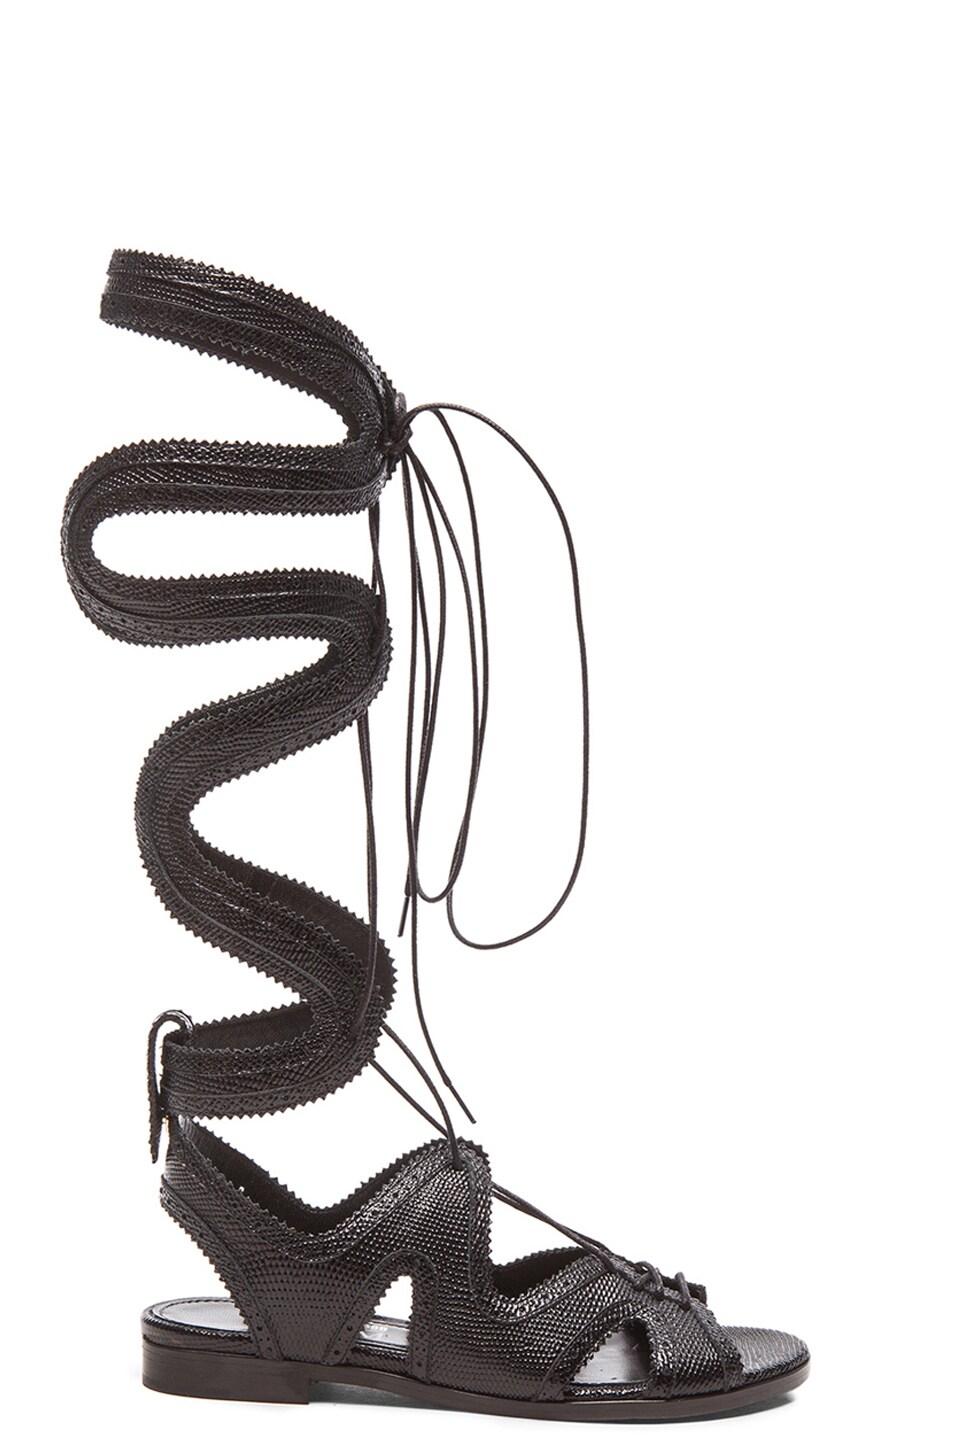 Image 1 of Nicholas Kirkwood x Erdem Gladiator Lace Up Leather Sandals in Black Stamped Croc